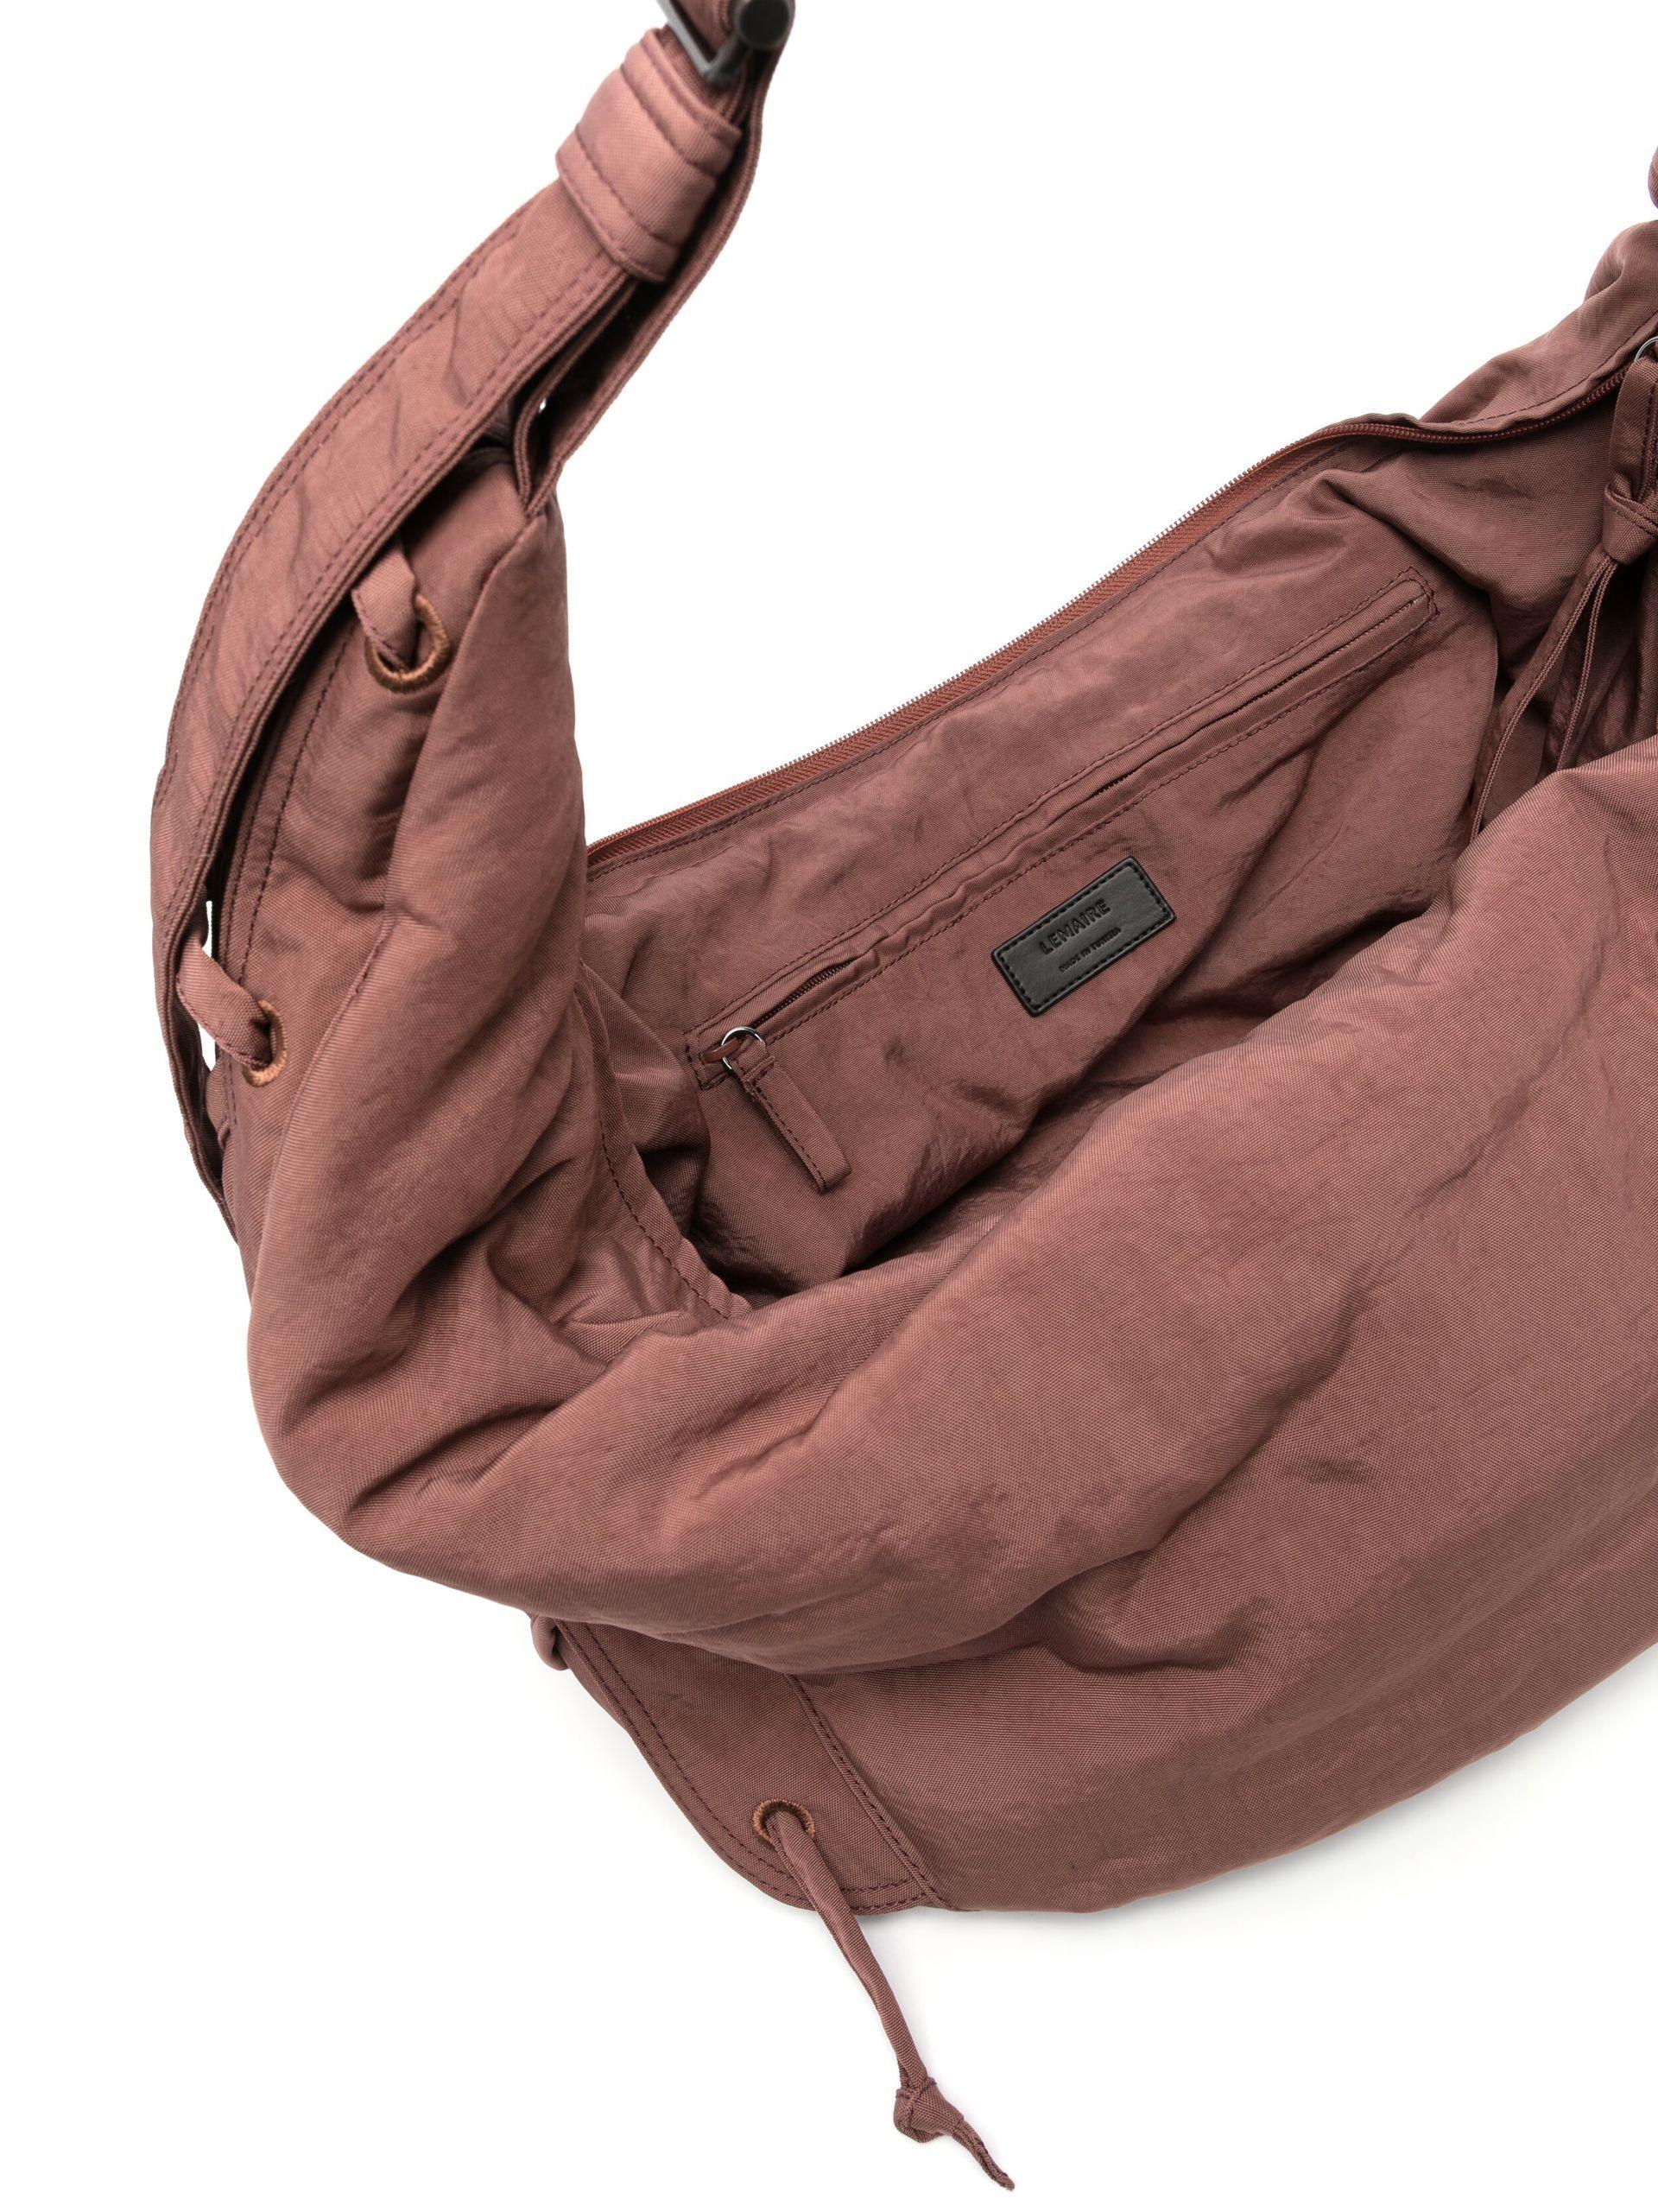 Powder Pink Soft Small Shoulder Bag - LEMAIRE - Lemaire-EU